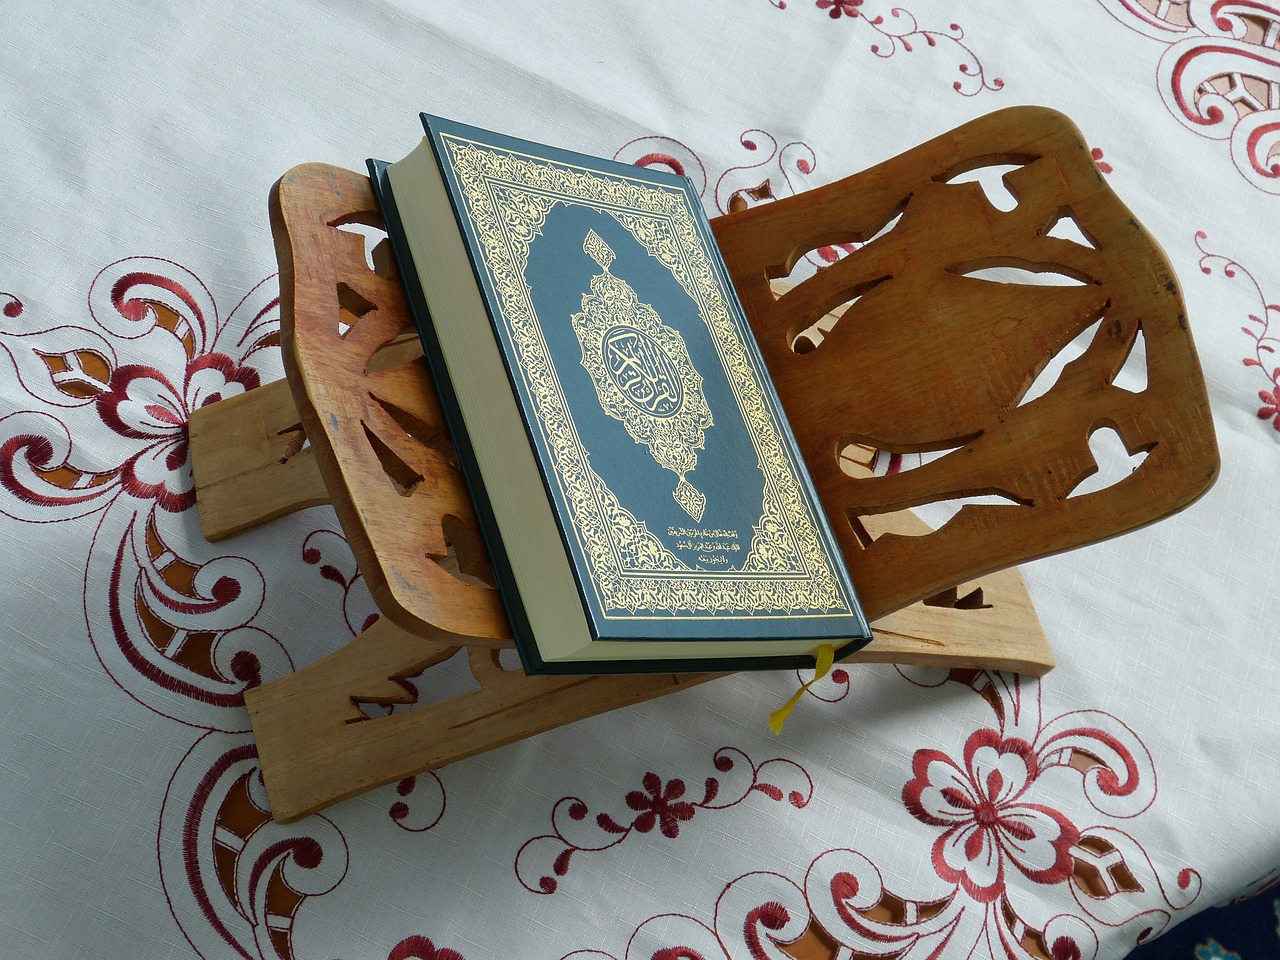 Learn Quran Recitation